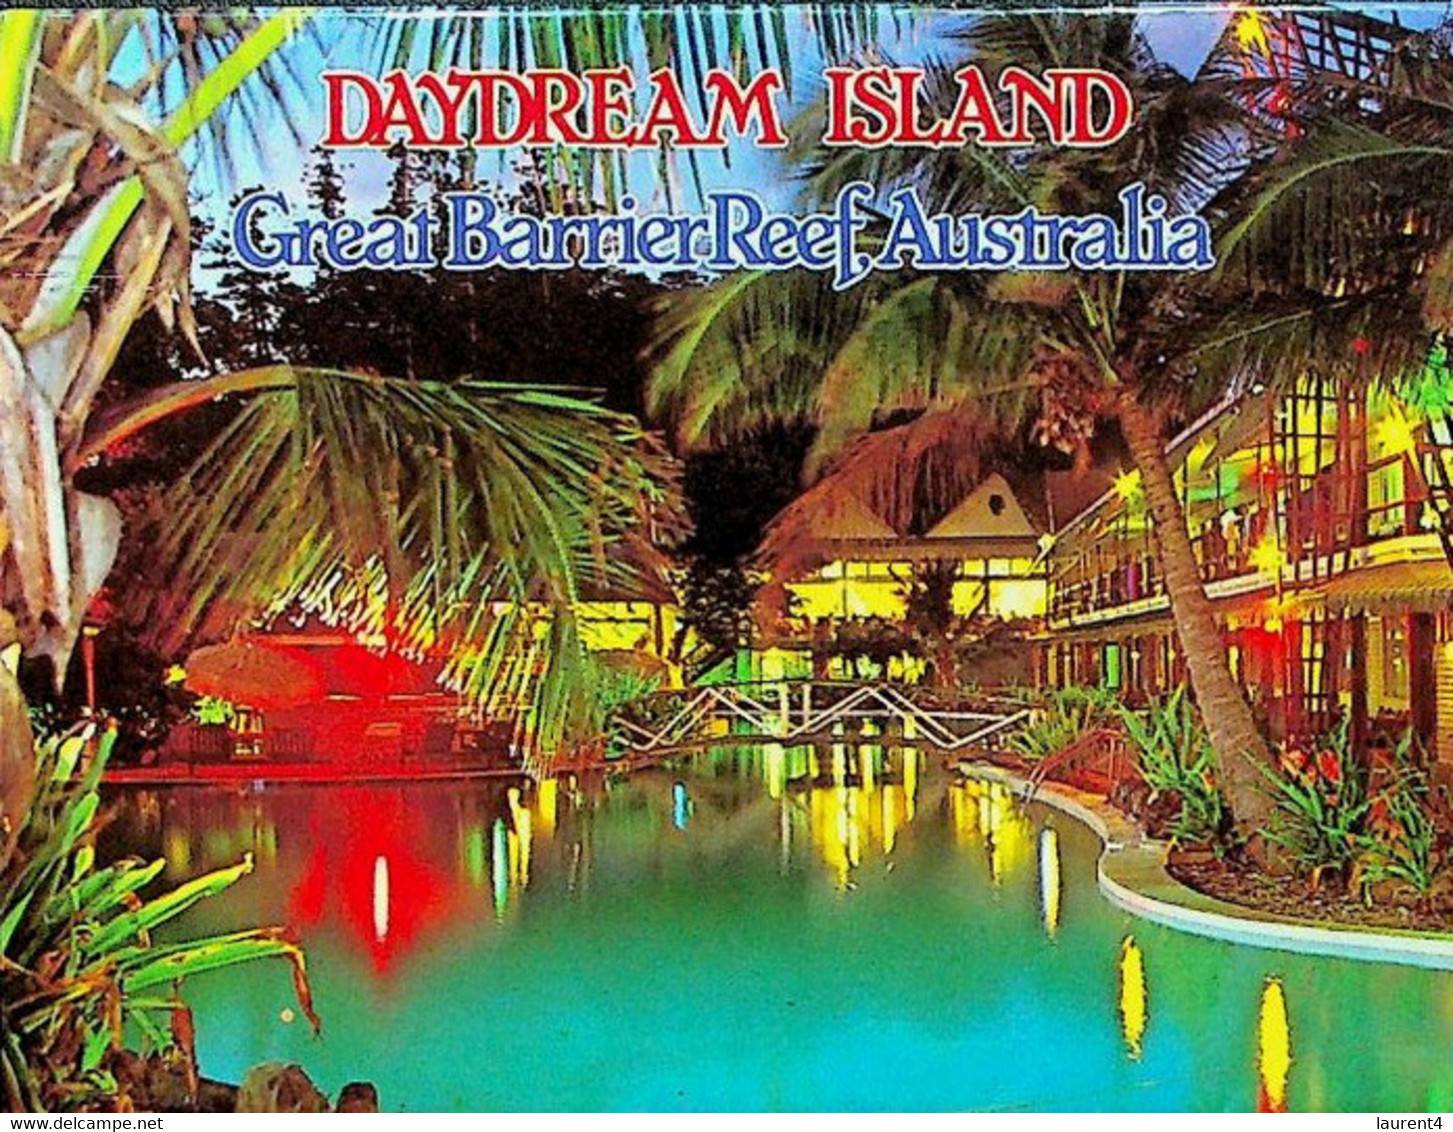 (Booklet 122) Australia - QLD - Daydream Island - Great Barrier Reef